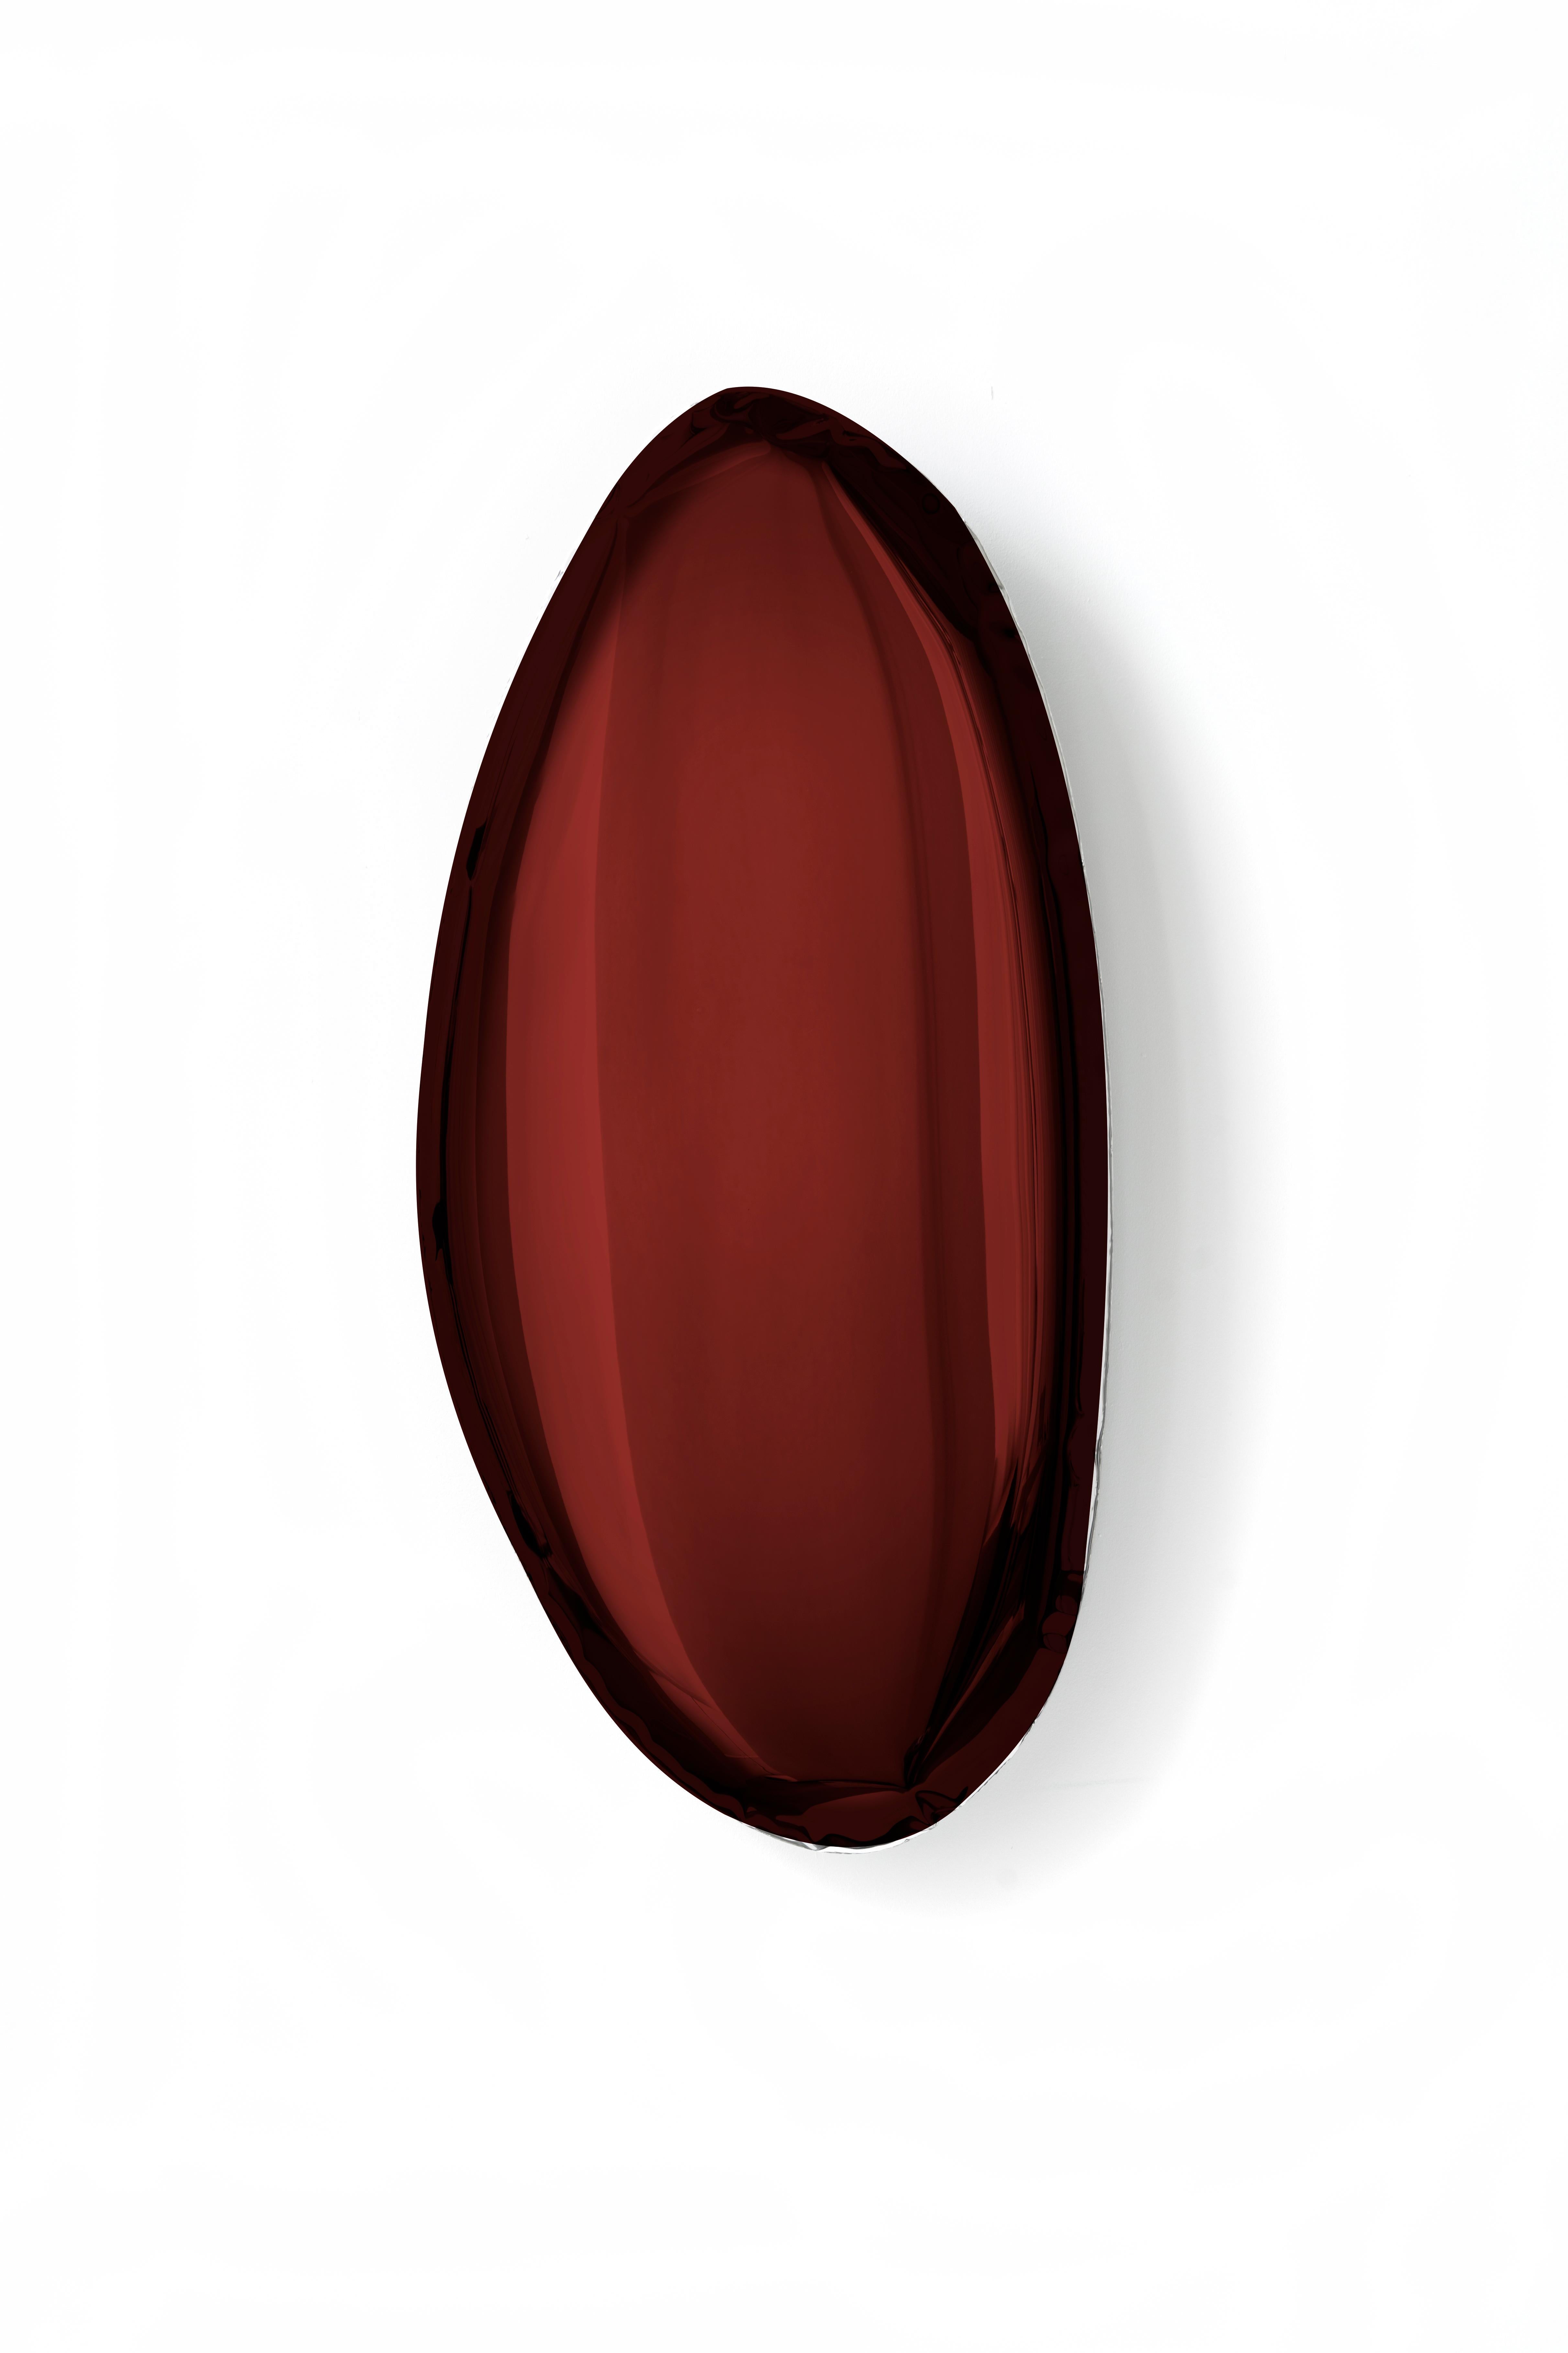 Minimalist Mirror Tafla O5 Rubin Red, in Polished Stainless Steel by Zieta For Sale